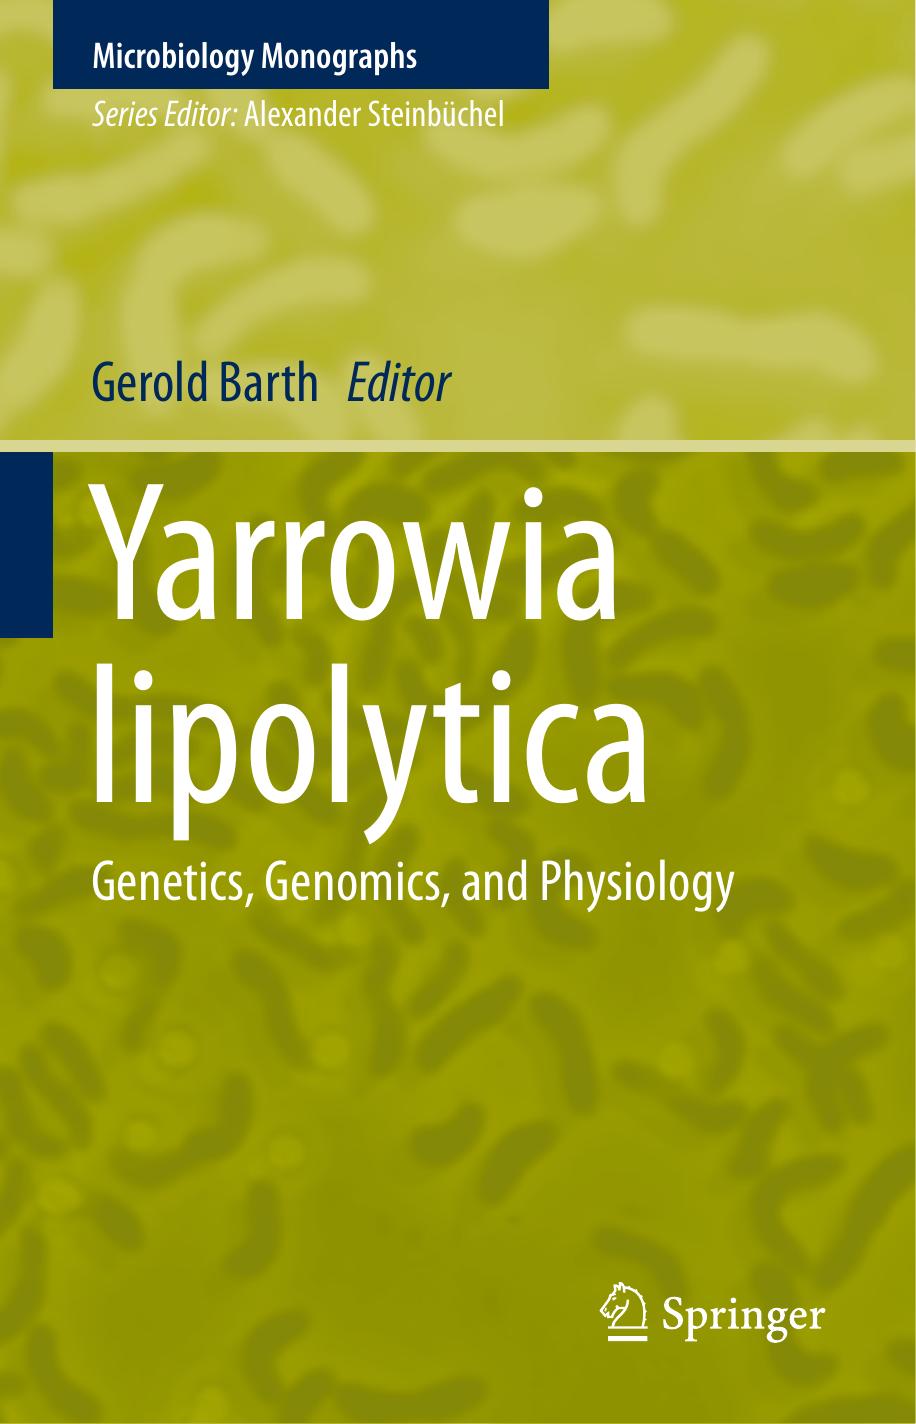 Yarrowia lipolytica Genetics, Genomics, and Physiology by Claude Gaillardin, Meriem Mekouar, Cécile Neuvéglise (auth.) 2013